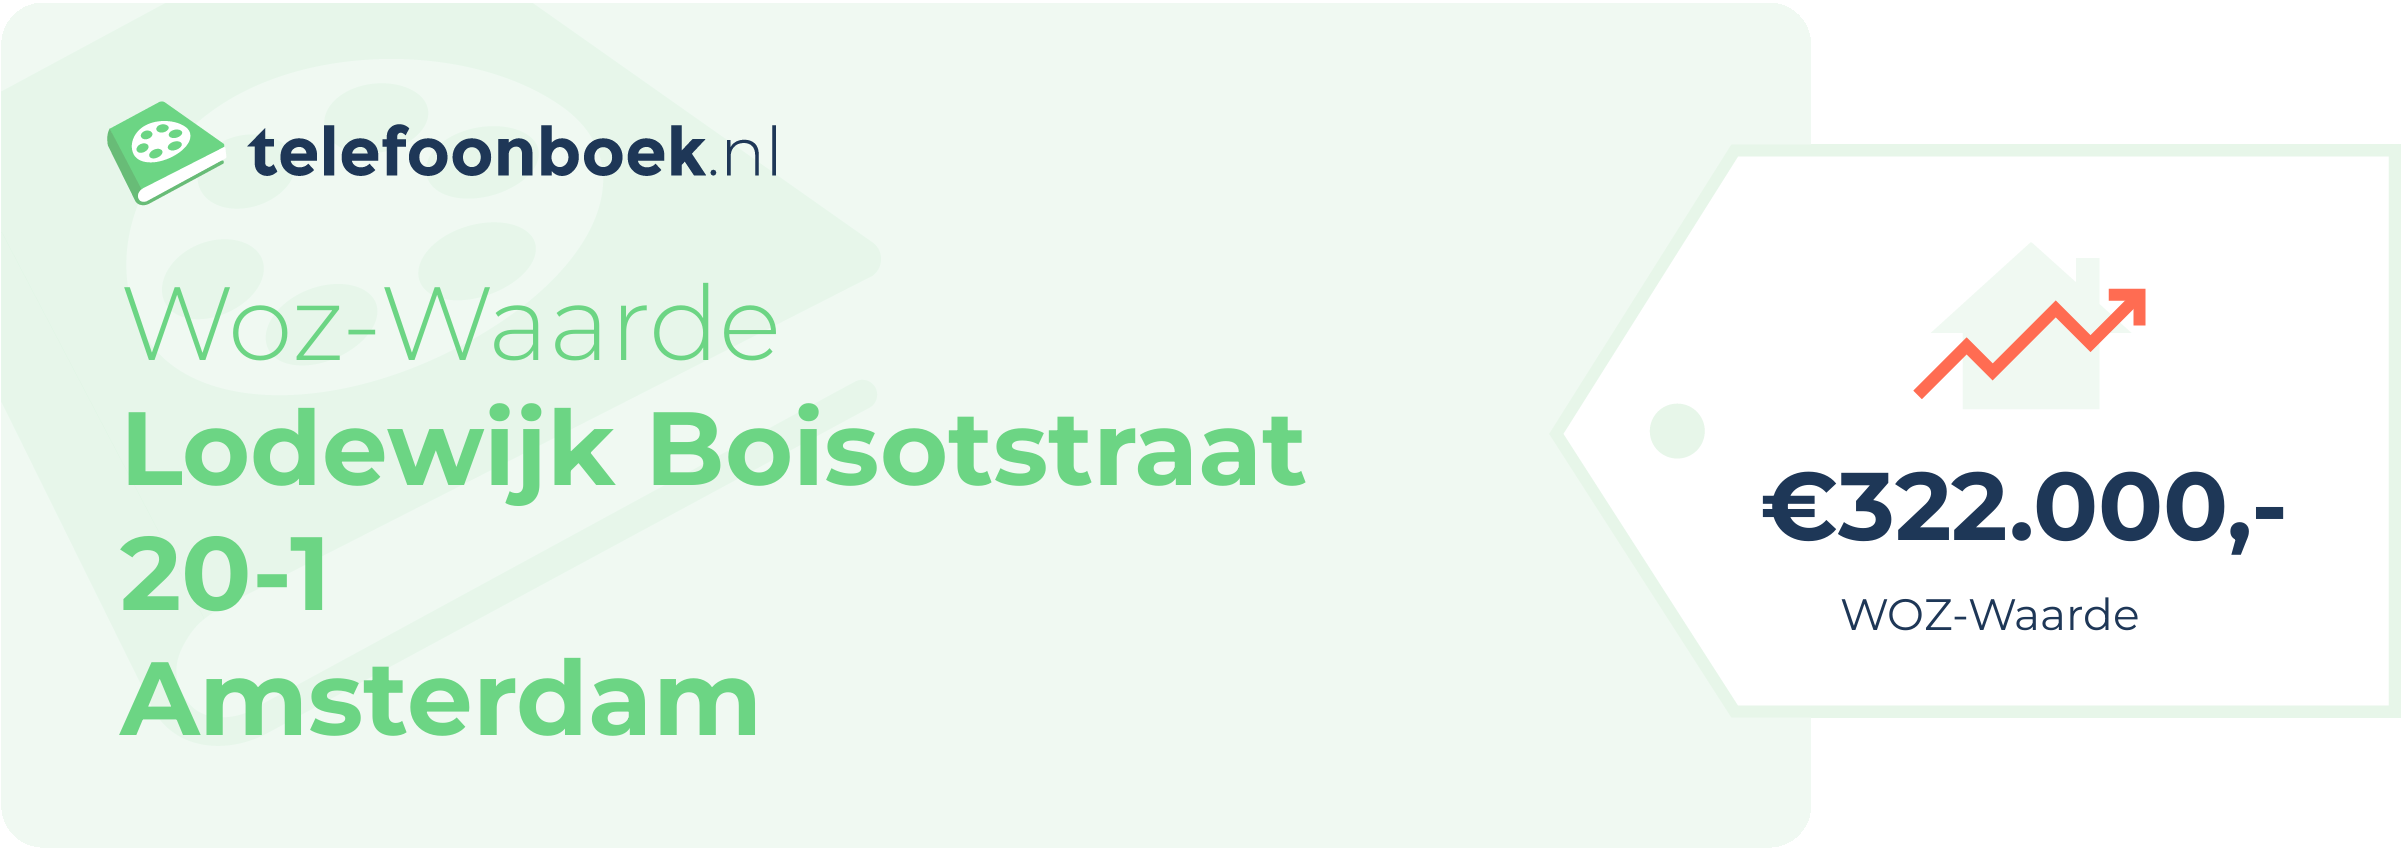 WOZ-waarde Lodewijk Boisotstraat 20-1 Amsterdam